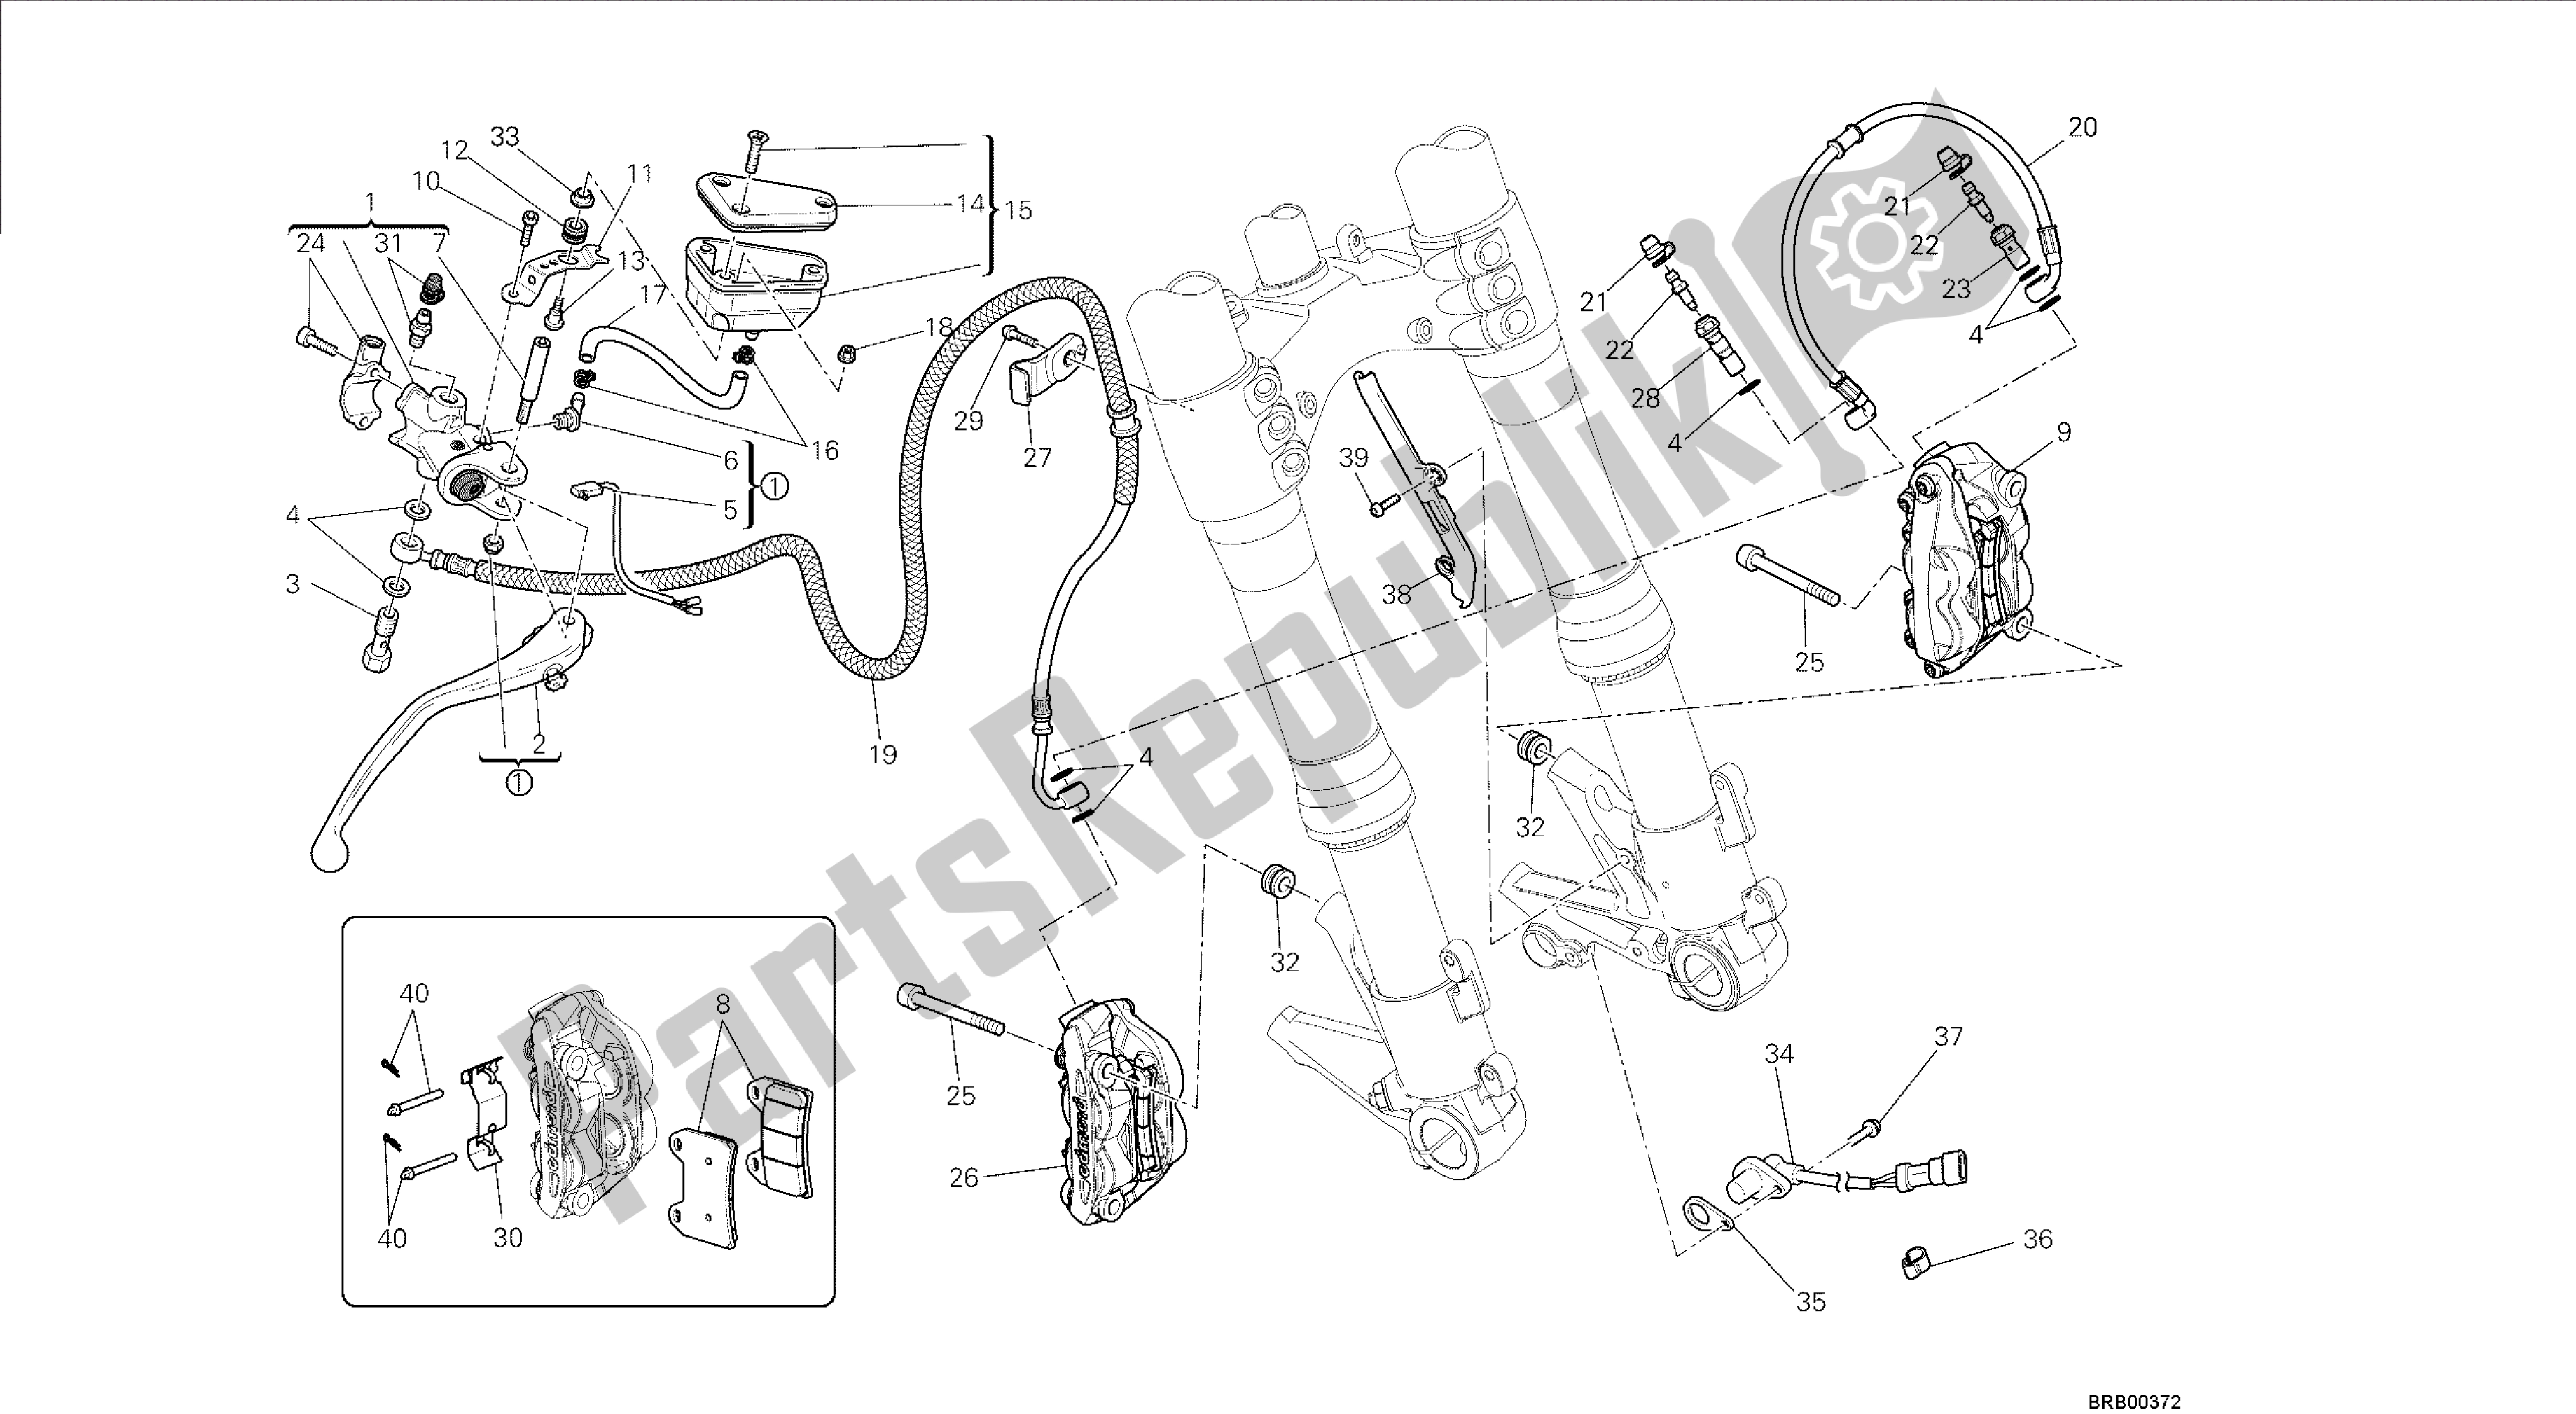 Todas las partes para Dibujo 024 - Sistema De Freno Delantero [mod: F848; Xst: Marco De Grupo Aus, Bra, Chn, Eur, Fra, Jap, Tha] de Ducati Streetfighter 848 2014